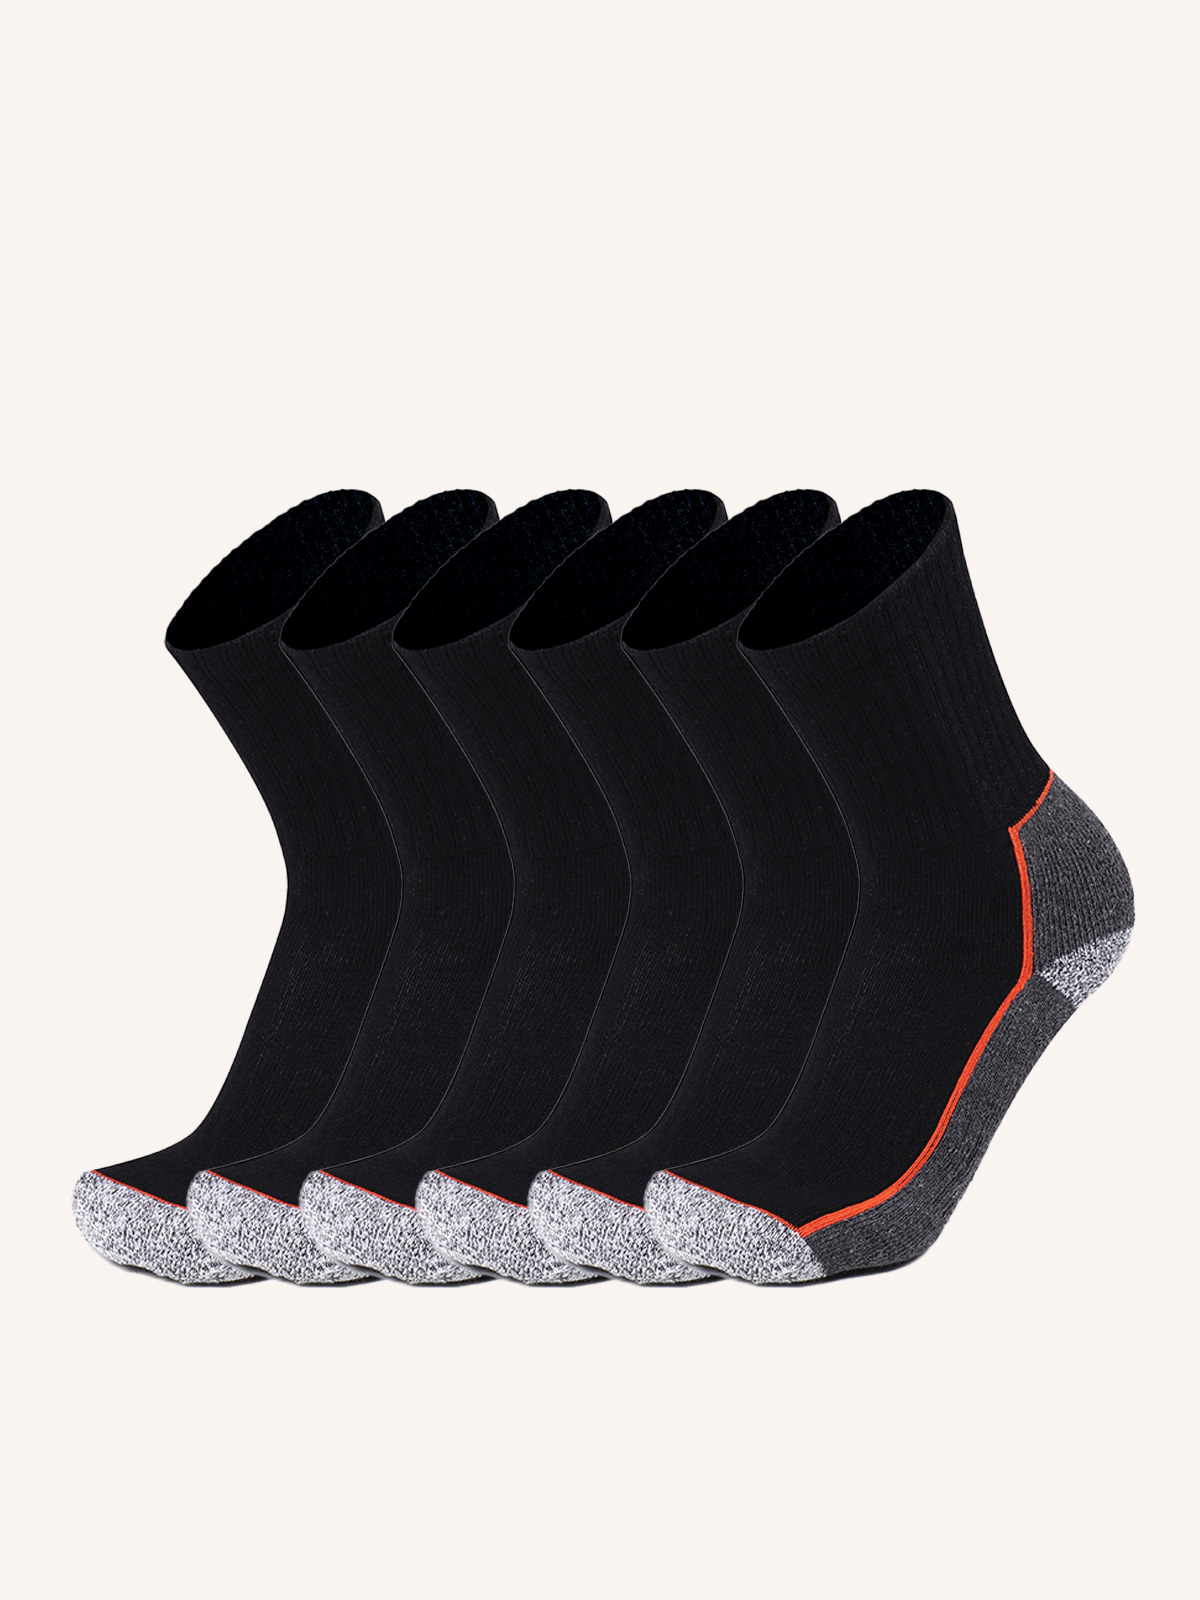 Unisex Stockinette Knit Short Sock | Pack of 6 pairs | JOB 00